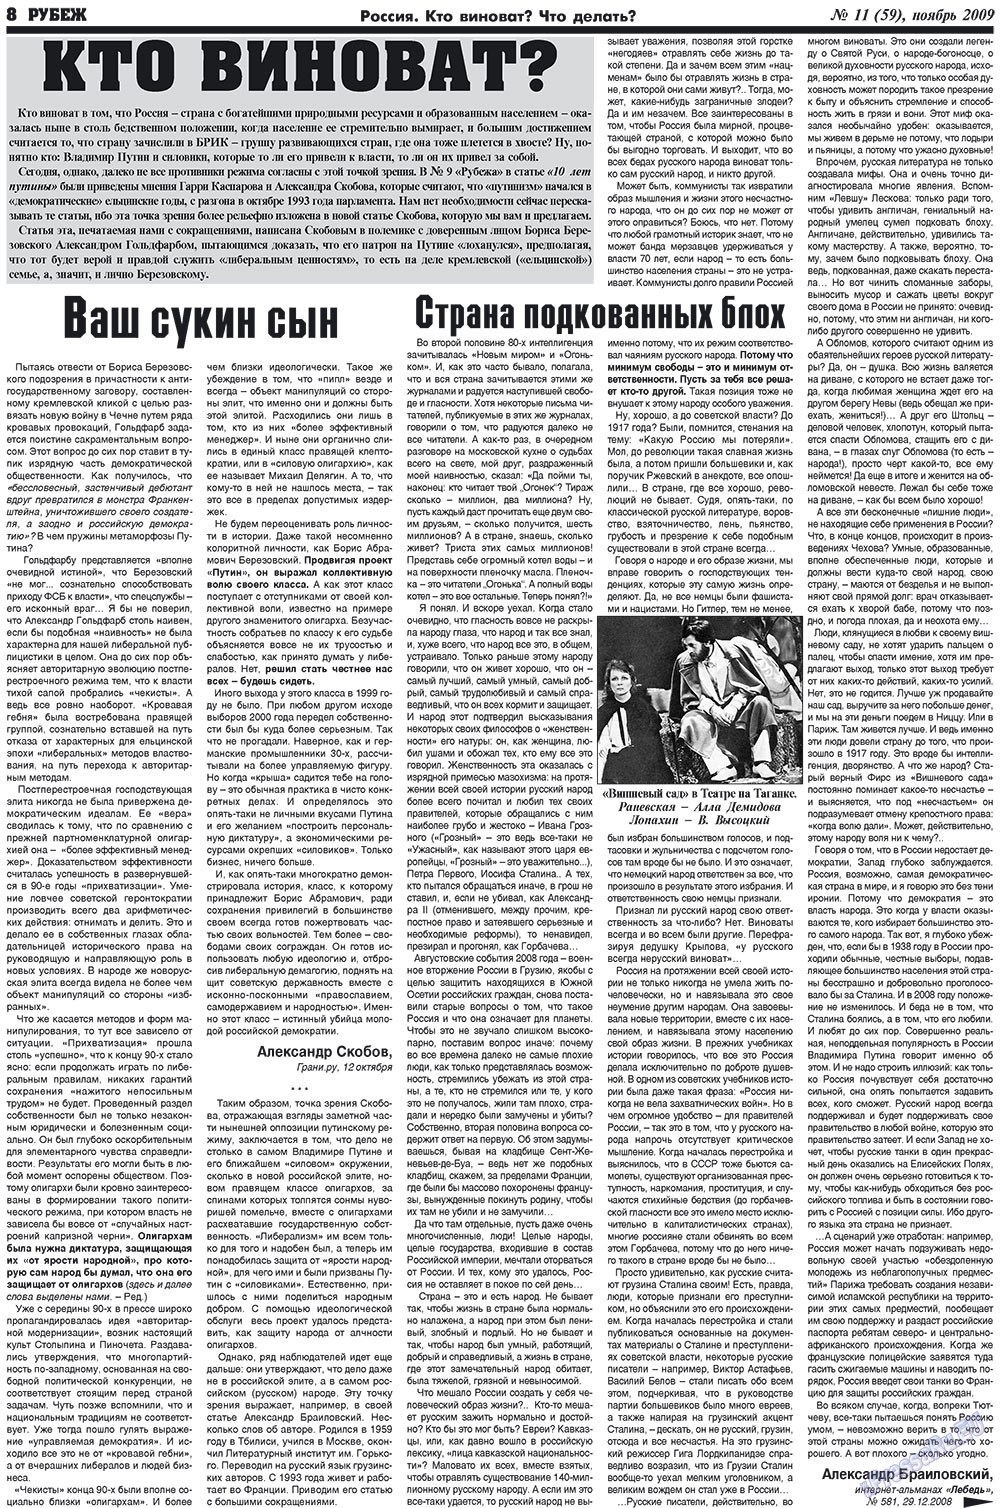 Рубеж, газета. 2009 №11 стр.8